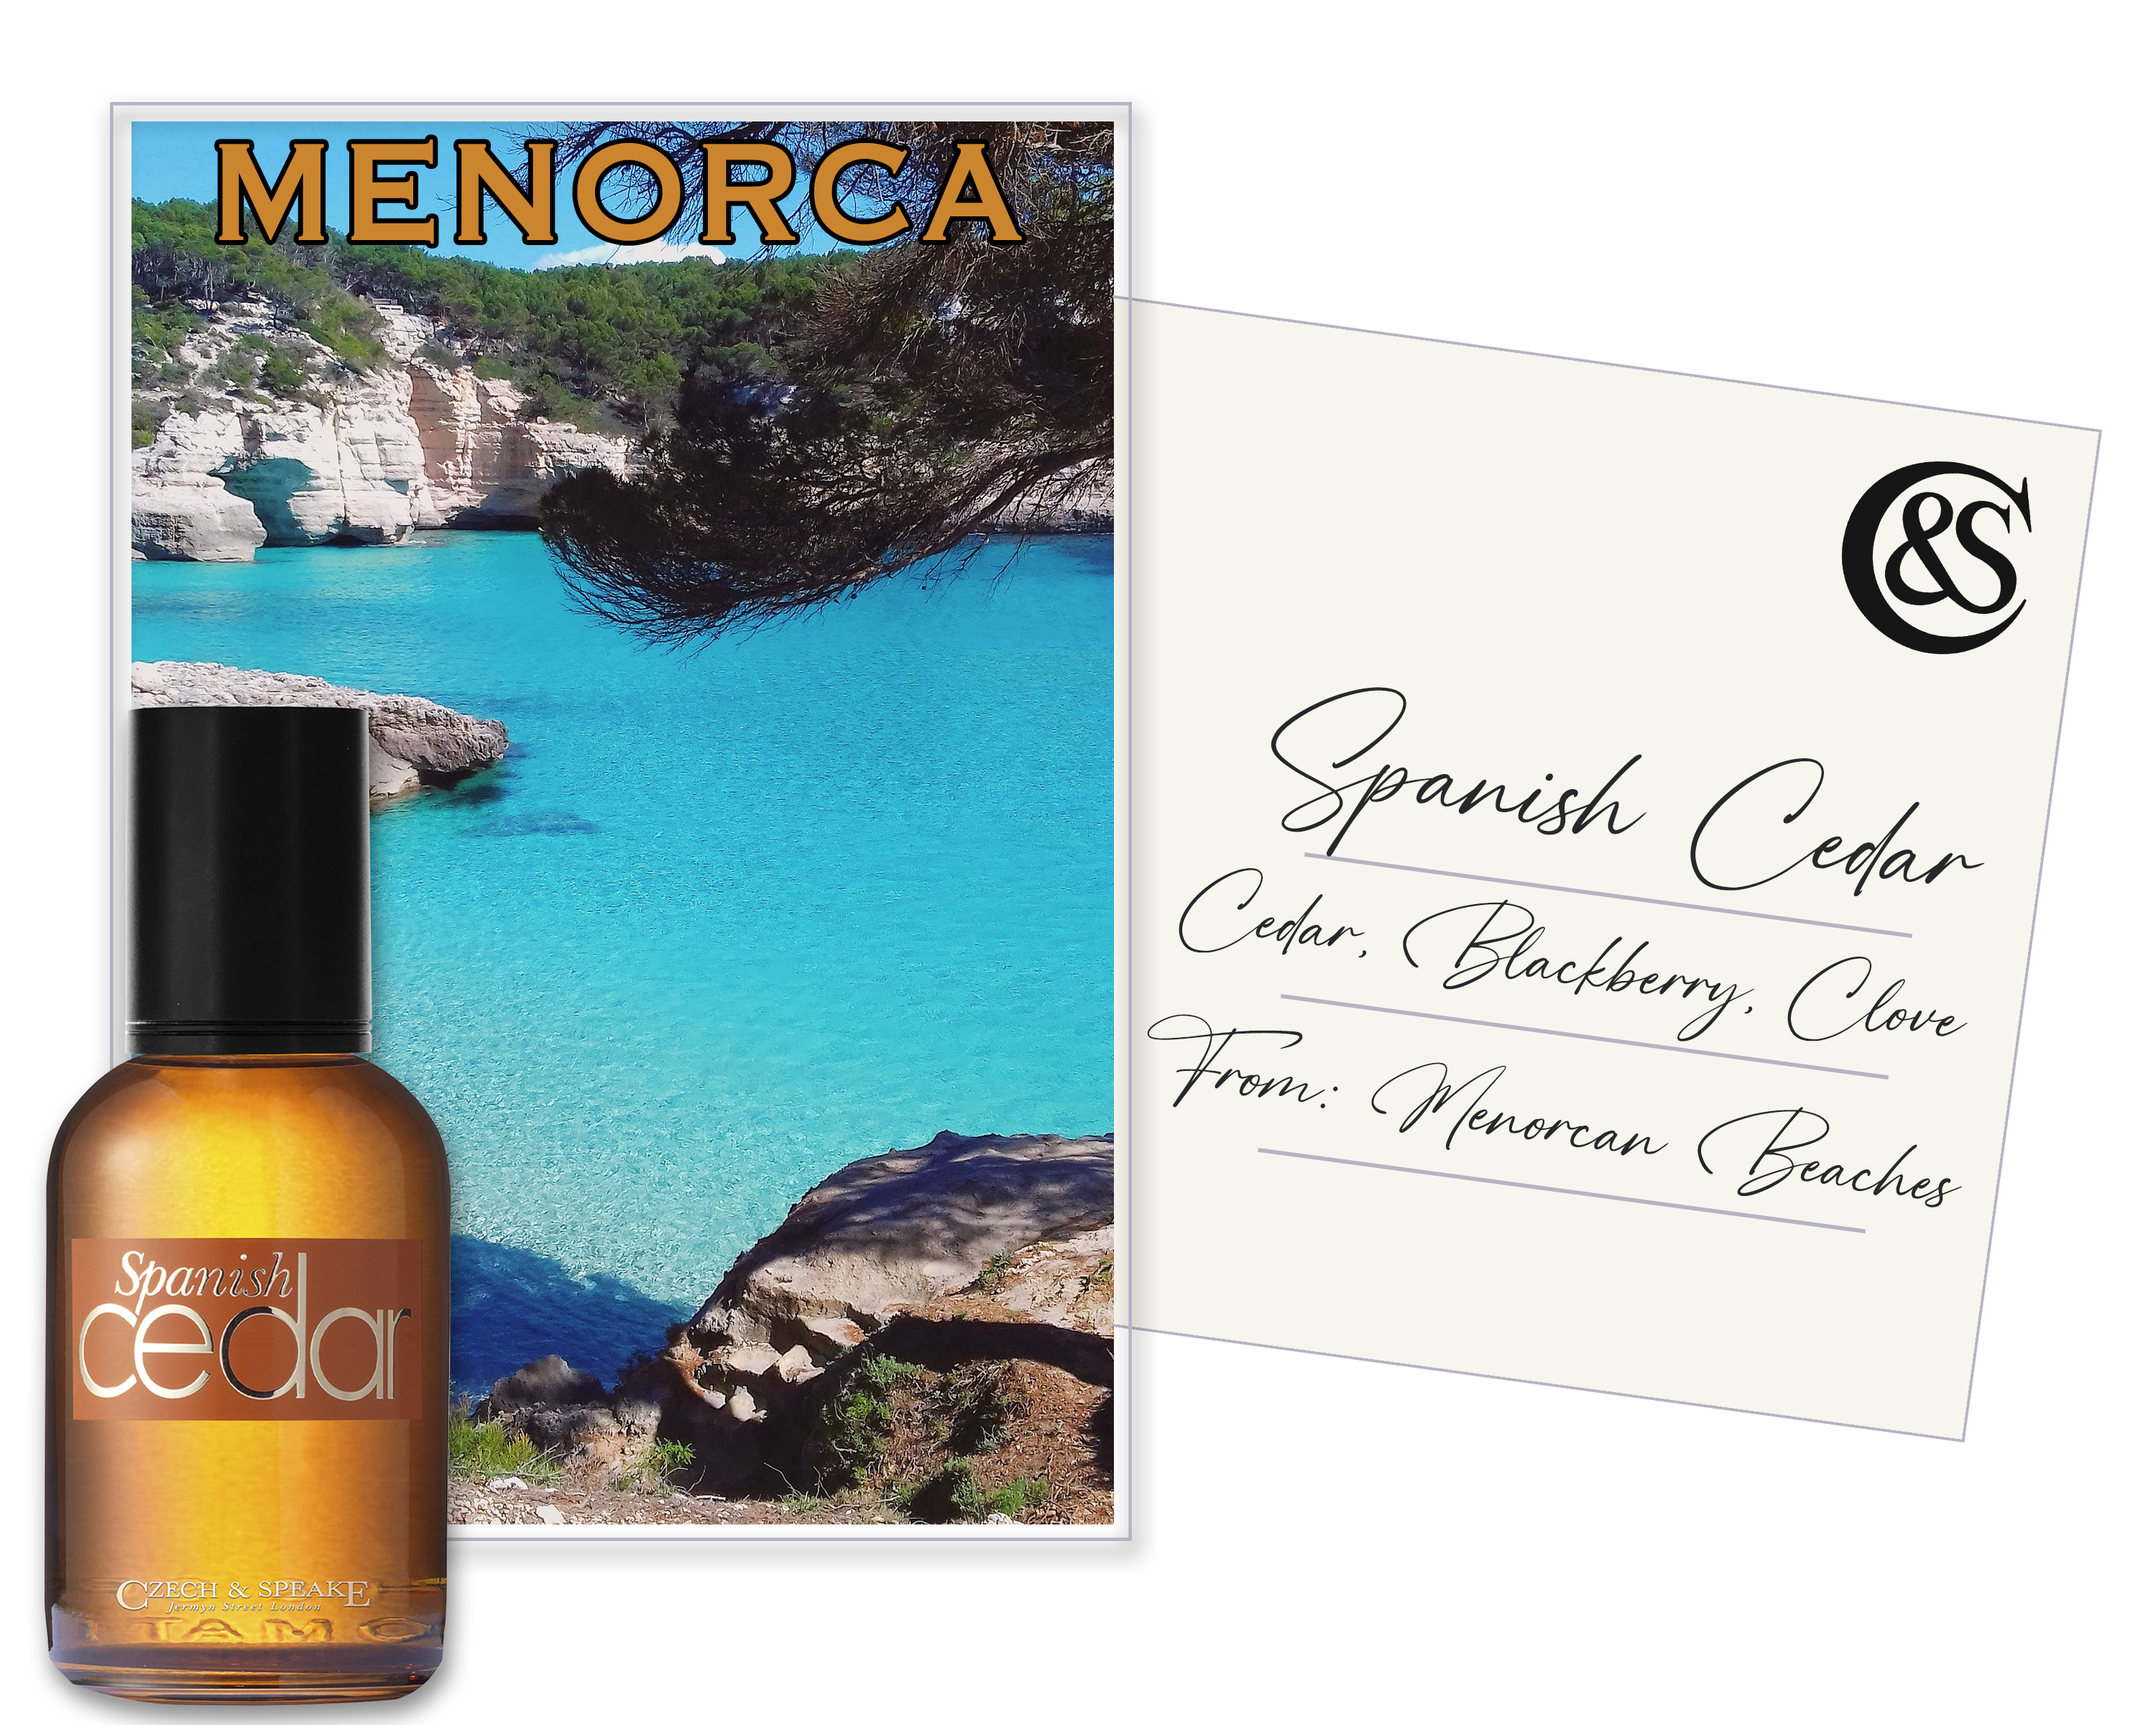 Spanish Cedar 50ml Eau de Parfum bottle to the left of a Menorca postcard, with the Spanish Cedar notes and destination on the reverse.